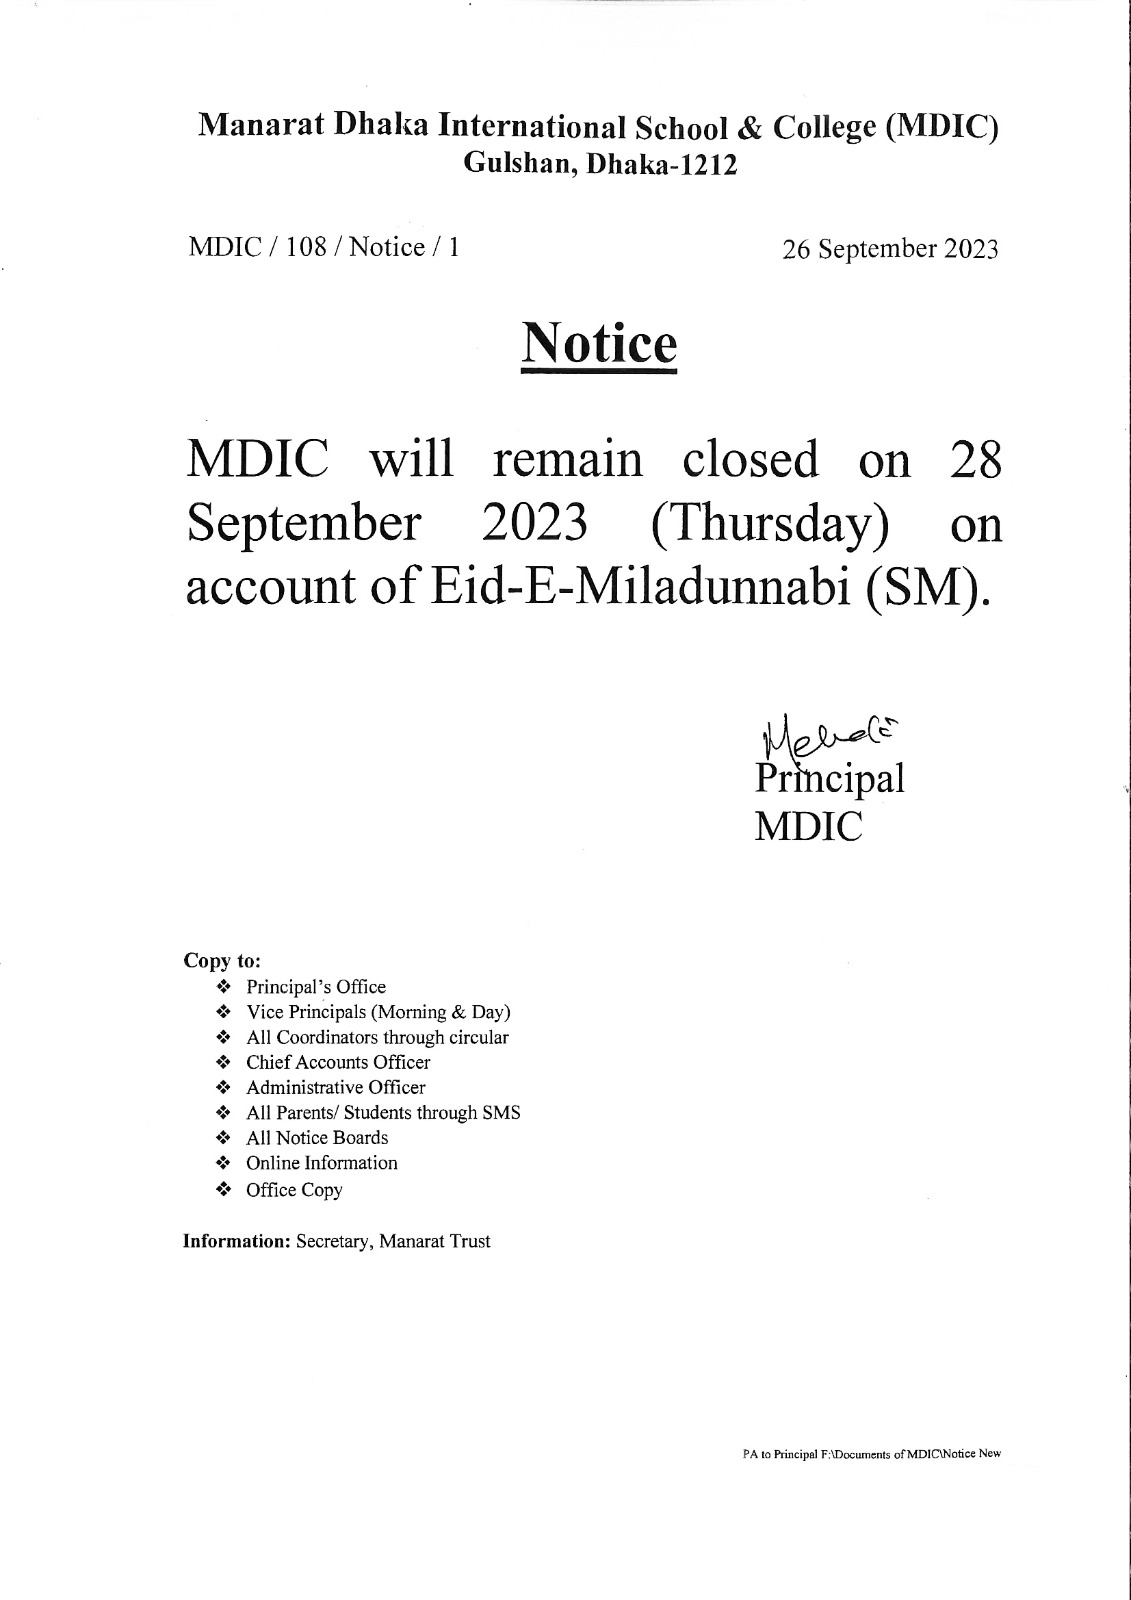 Notice for Eid-E-Miladunnabi (SM)